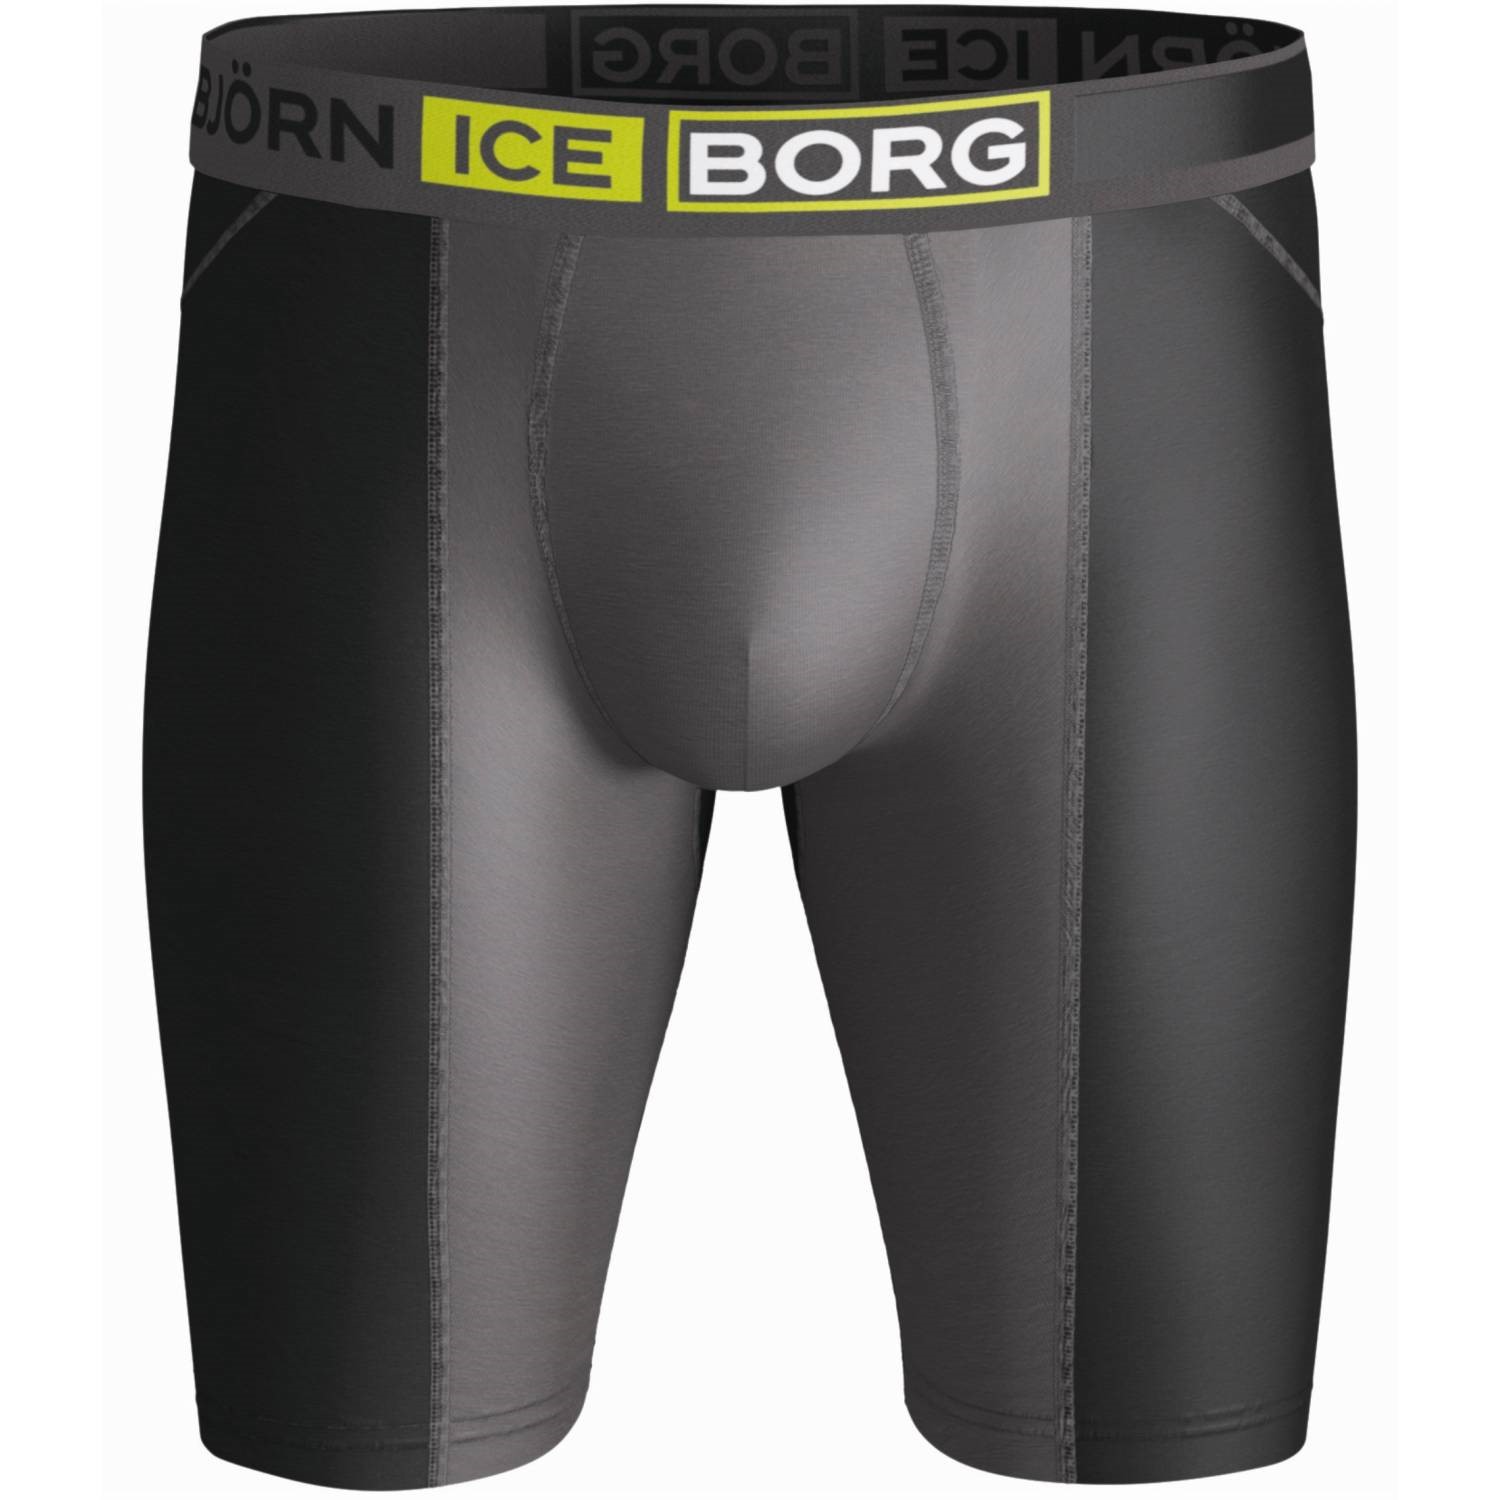 Björn Borg Performance Ice Preston Long Shorts